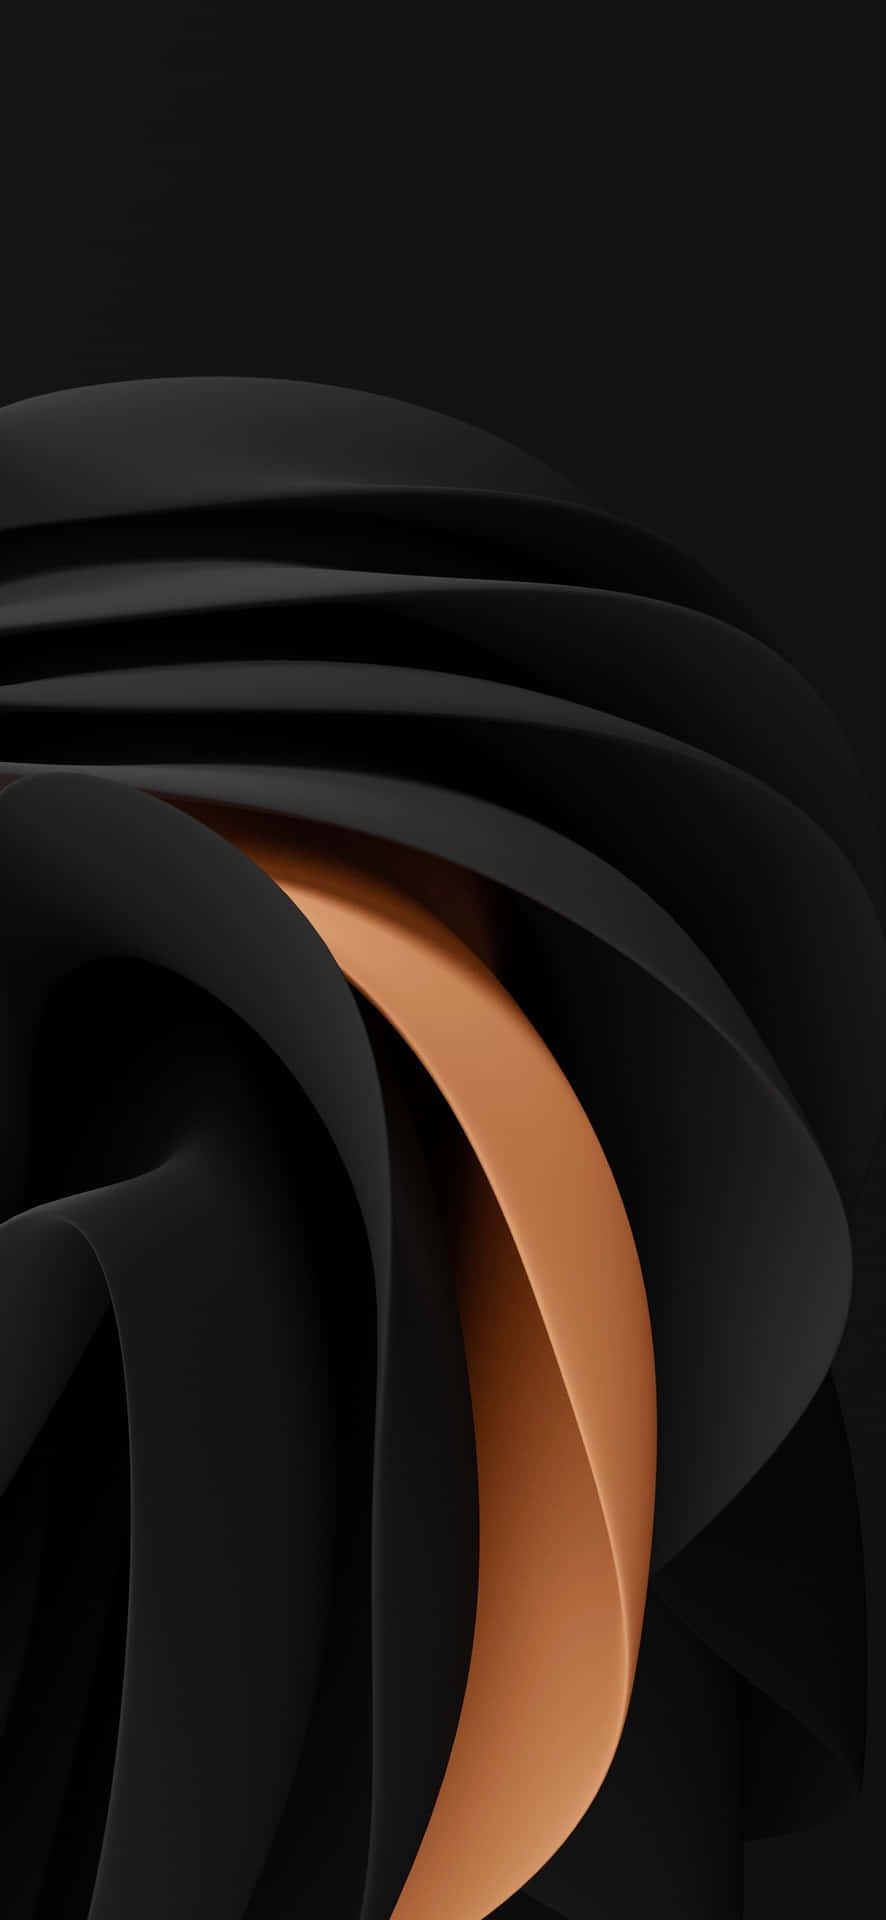 Abstract Blackand Copper Design Wallpaper